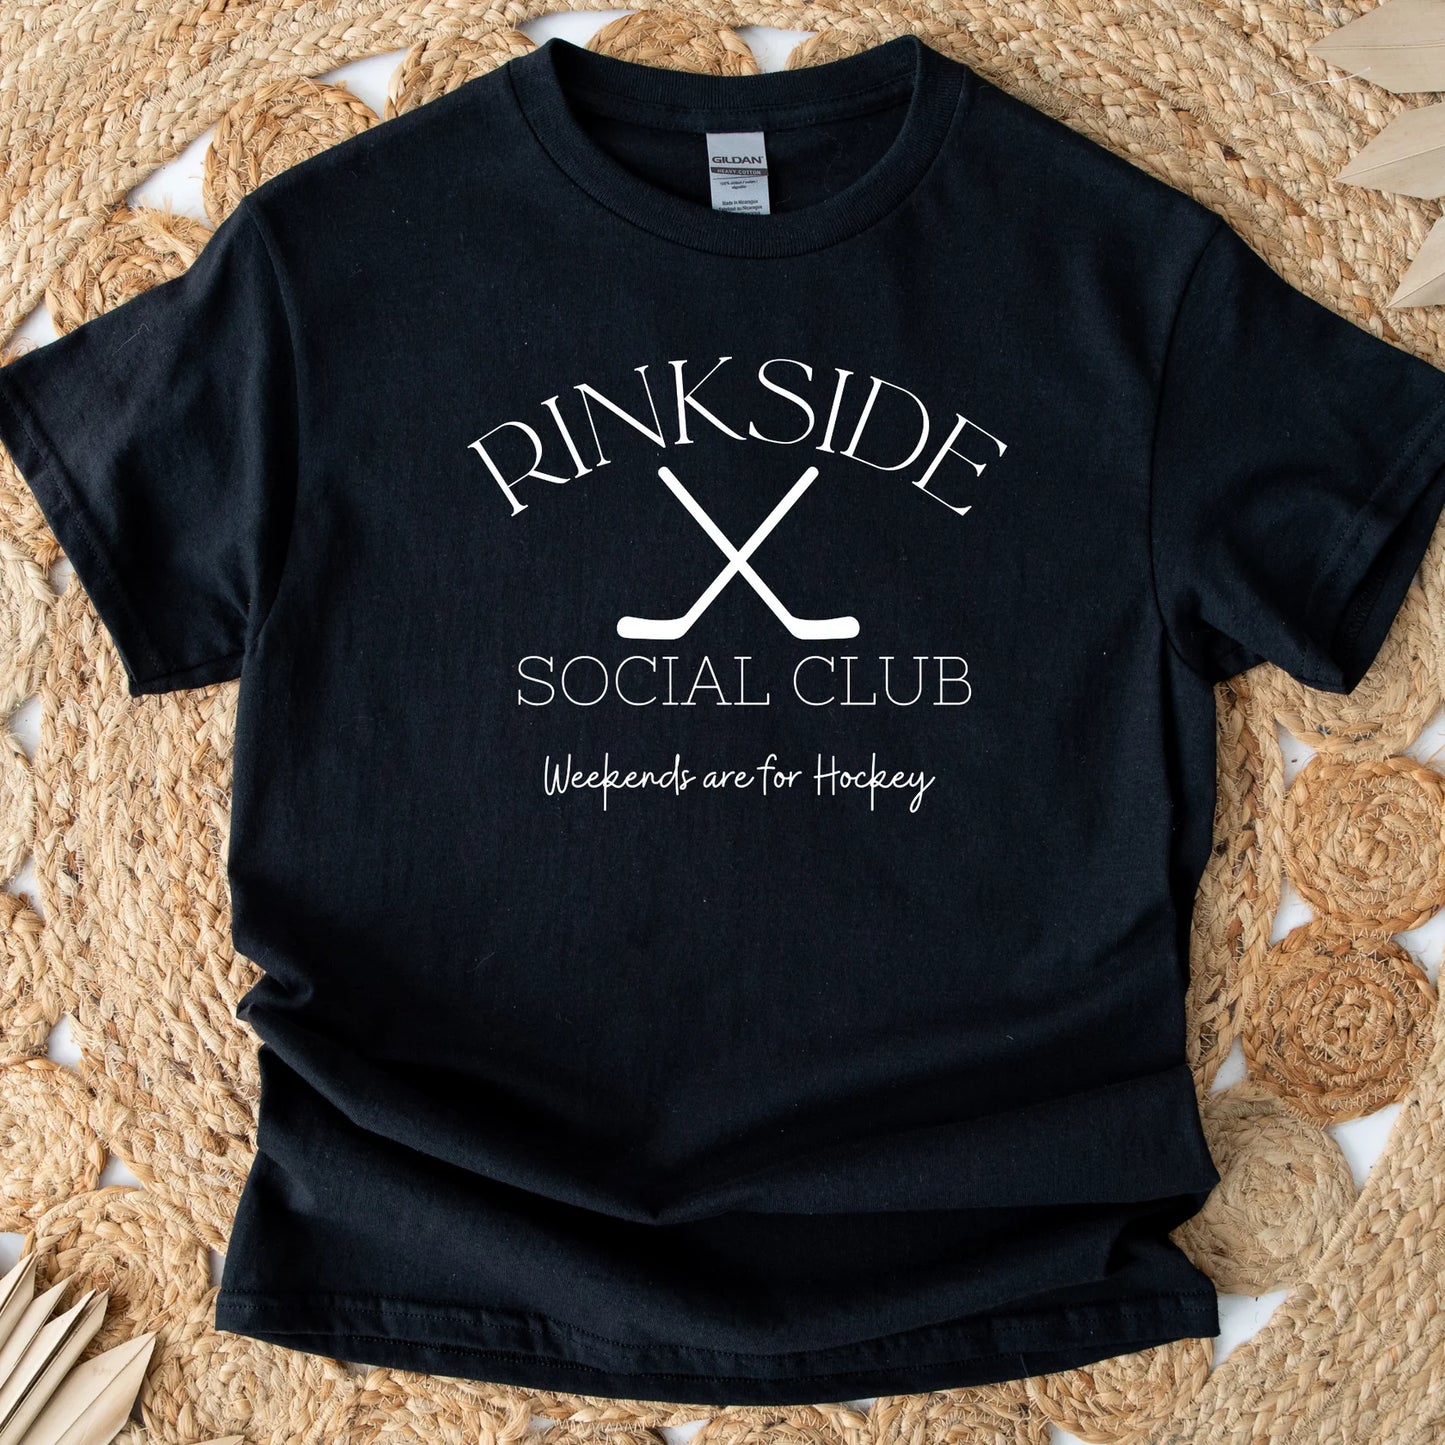 Rinkside Social Club Graphic Tee - 2 colors